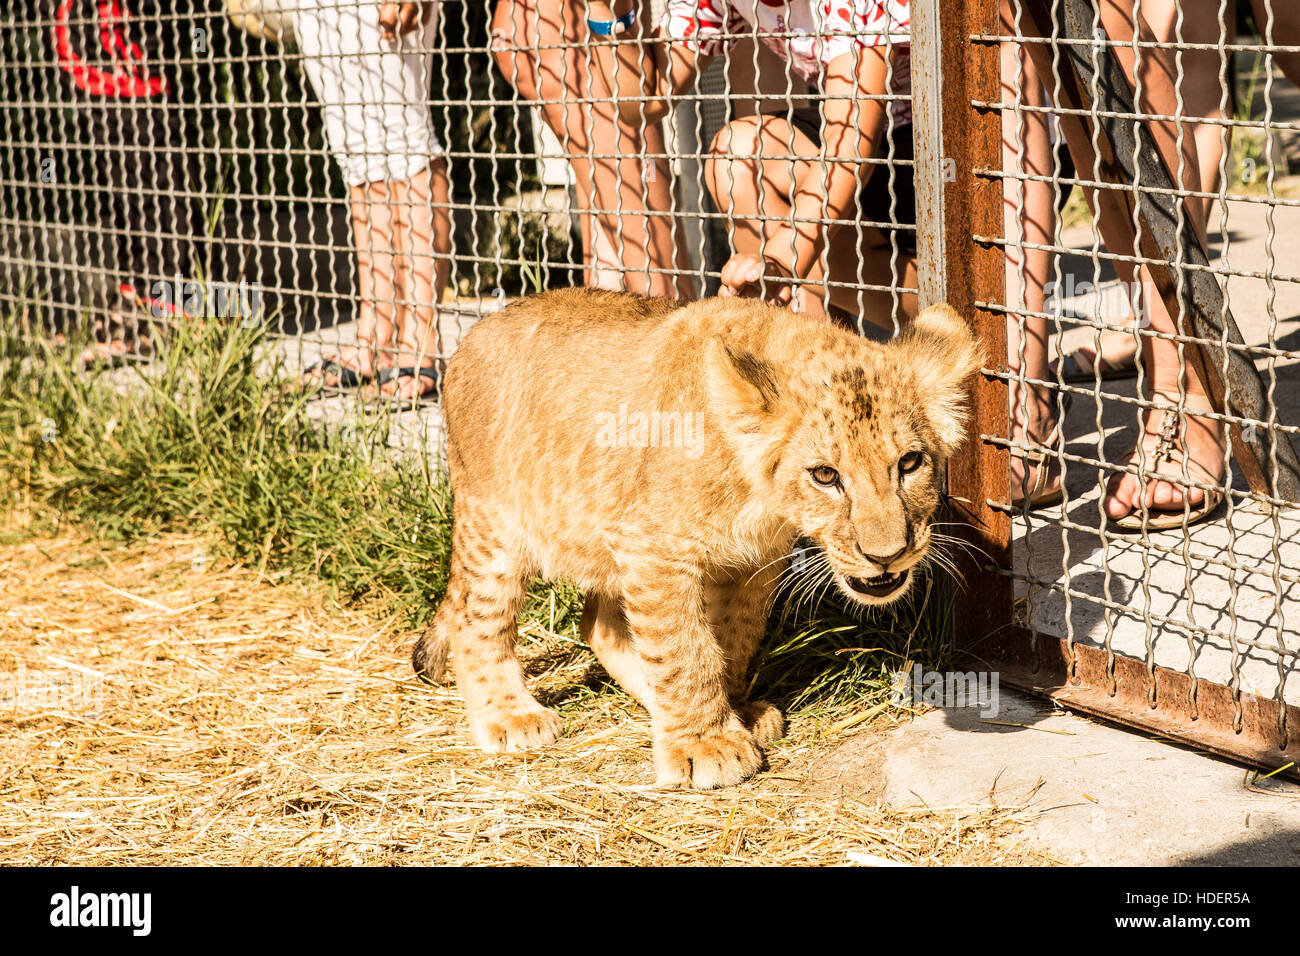 Lion cub and children in lion parlk Taigan, Crimea, Russia Stock Photo